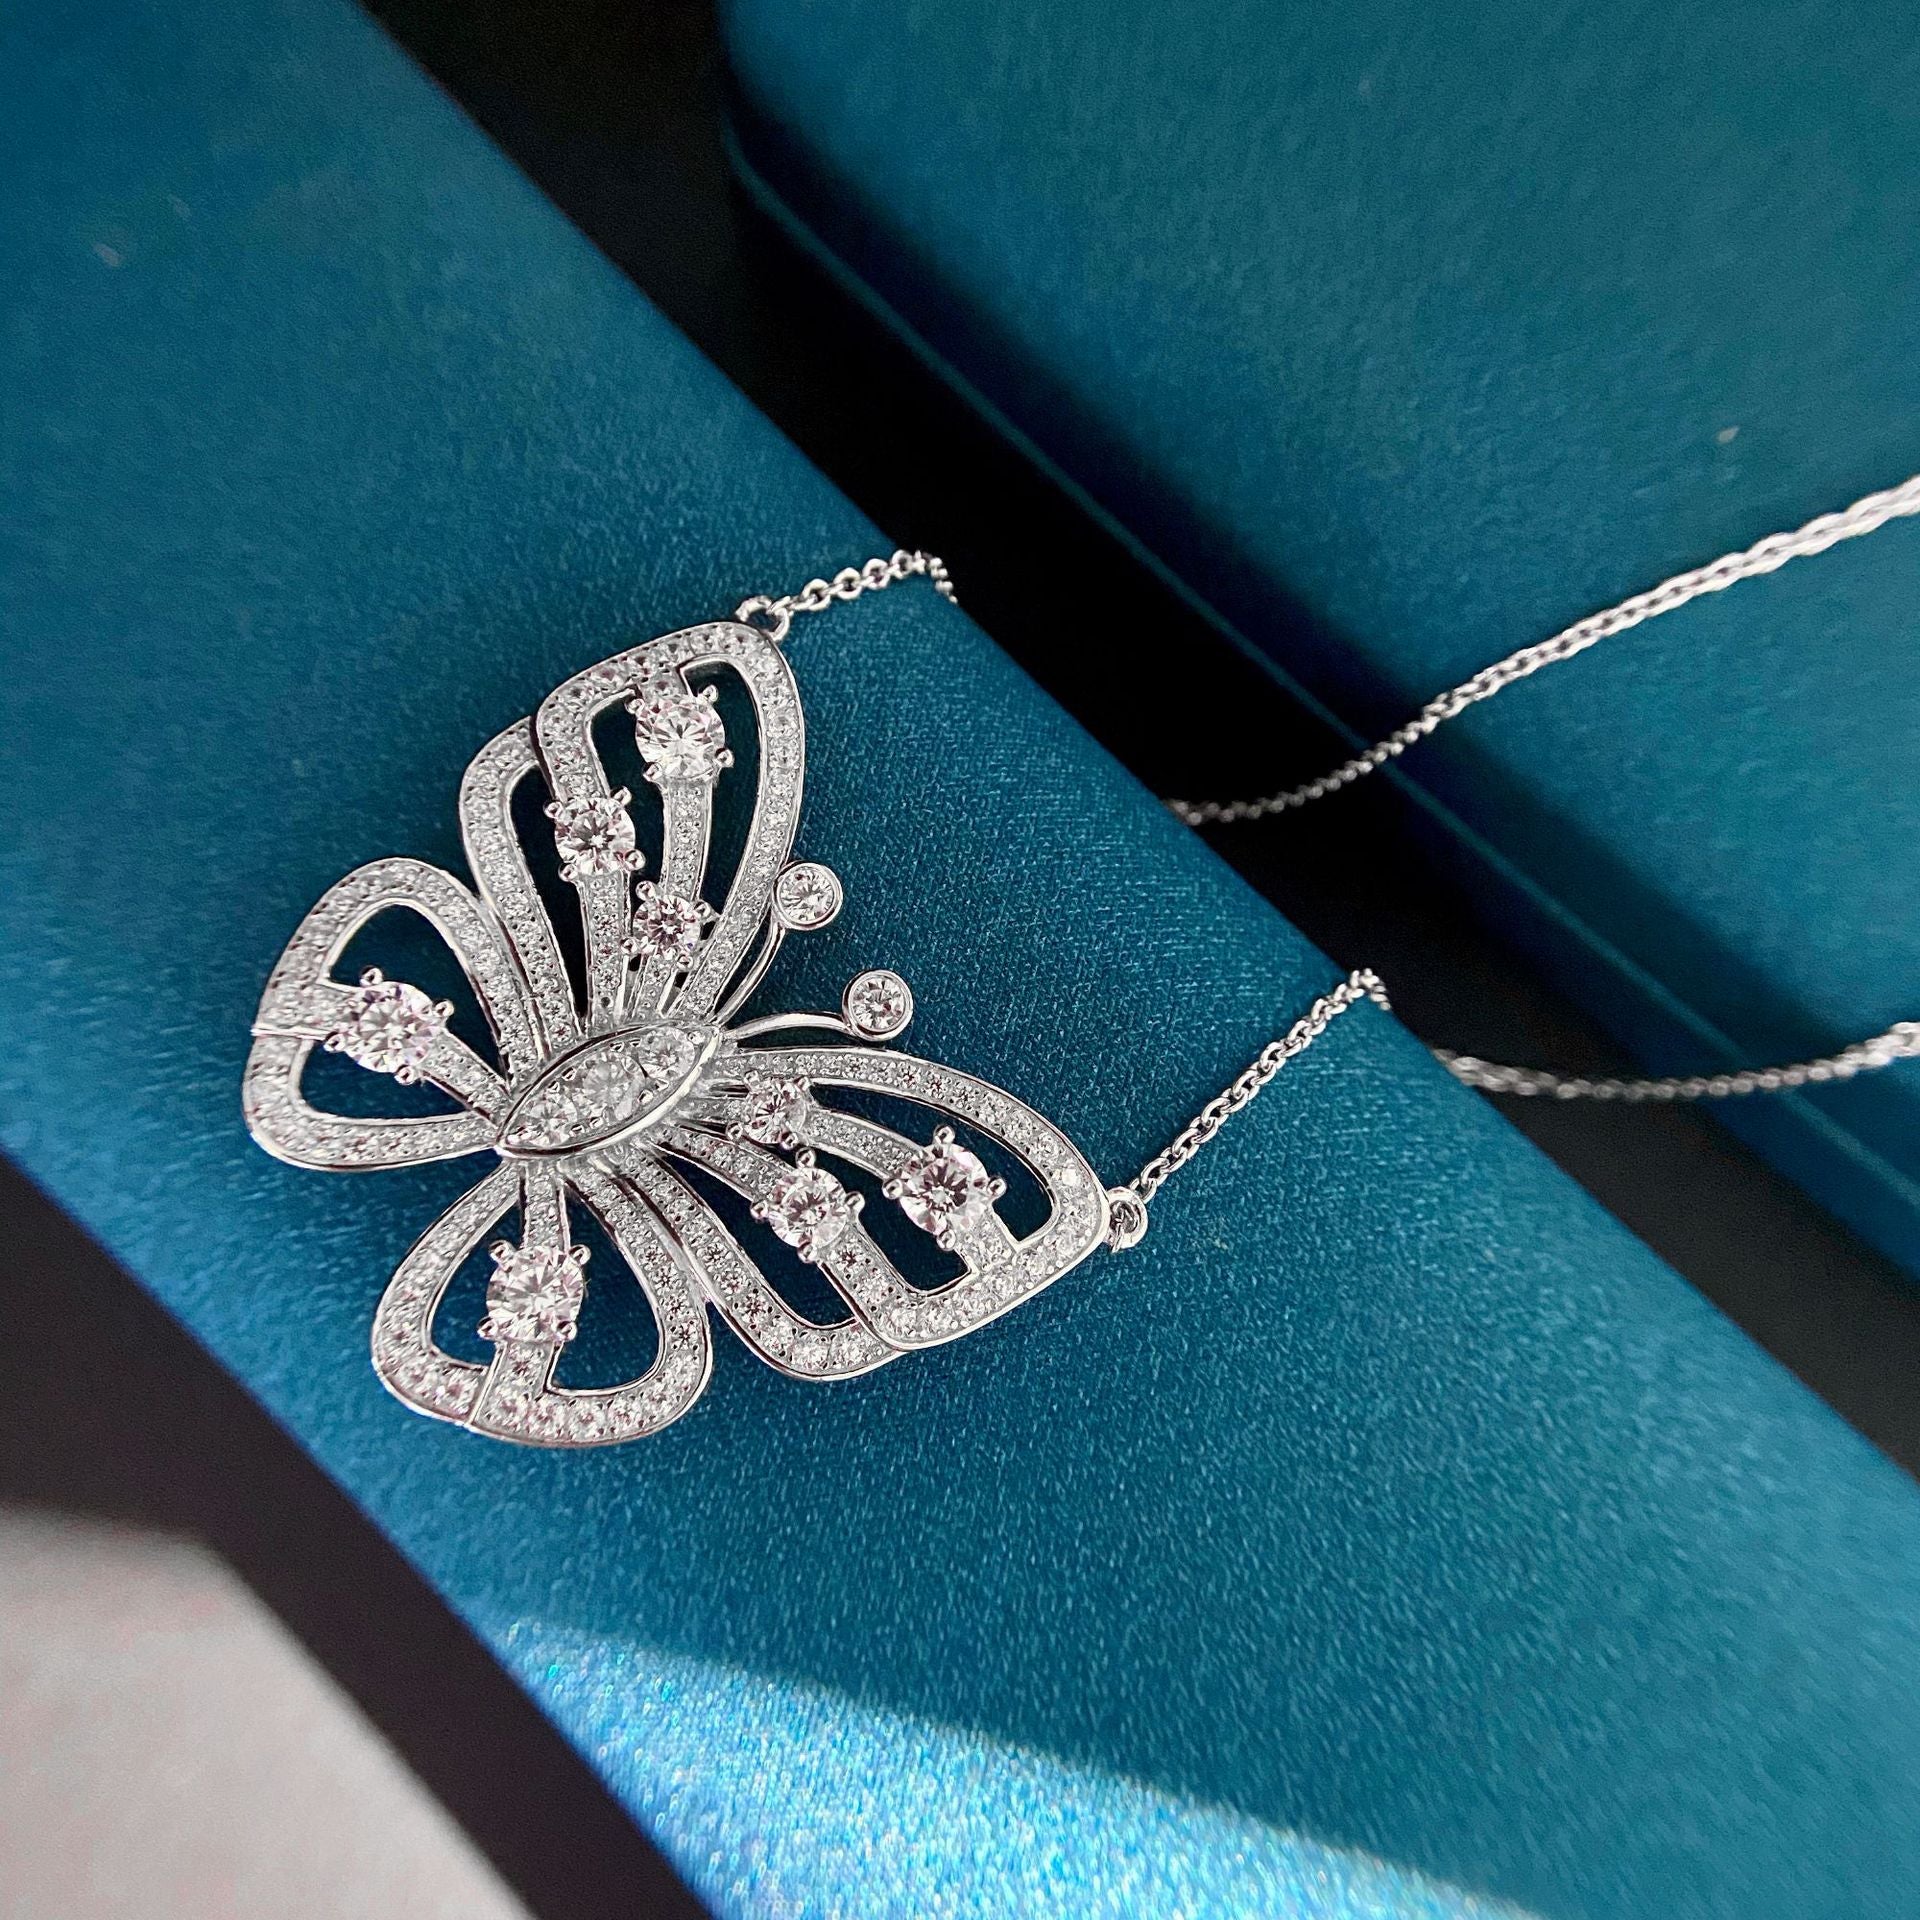 Diamond Butterfly Necklace - HERS